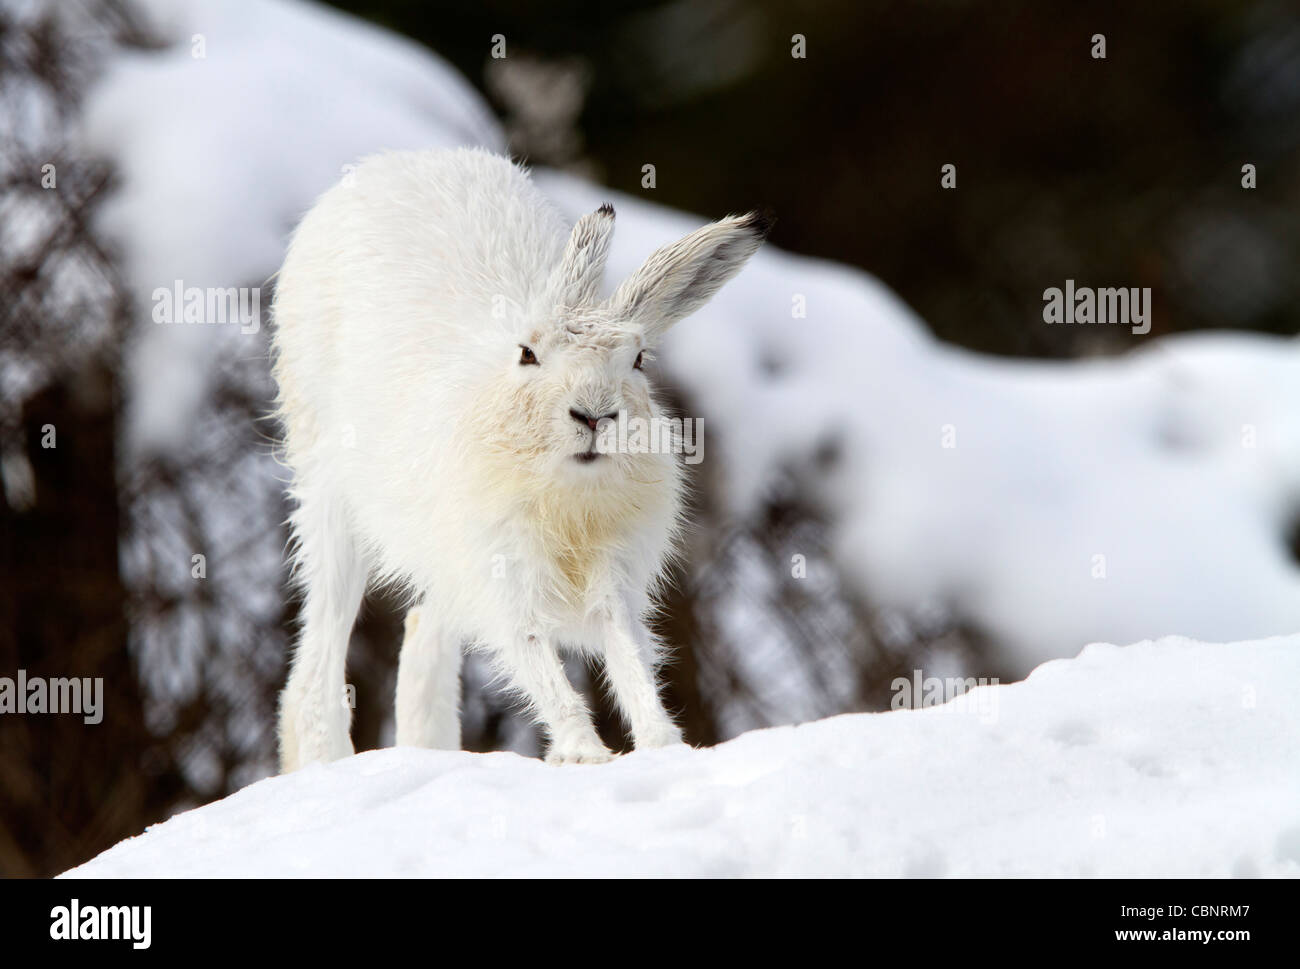 La lepre bianca nella neve (Lepus timidus) Foto Stock